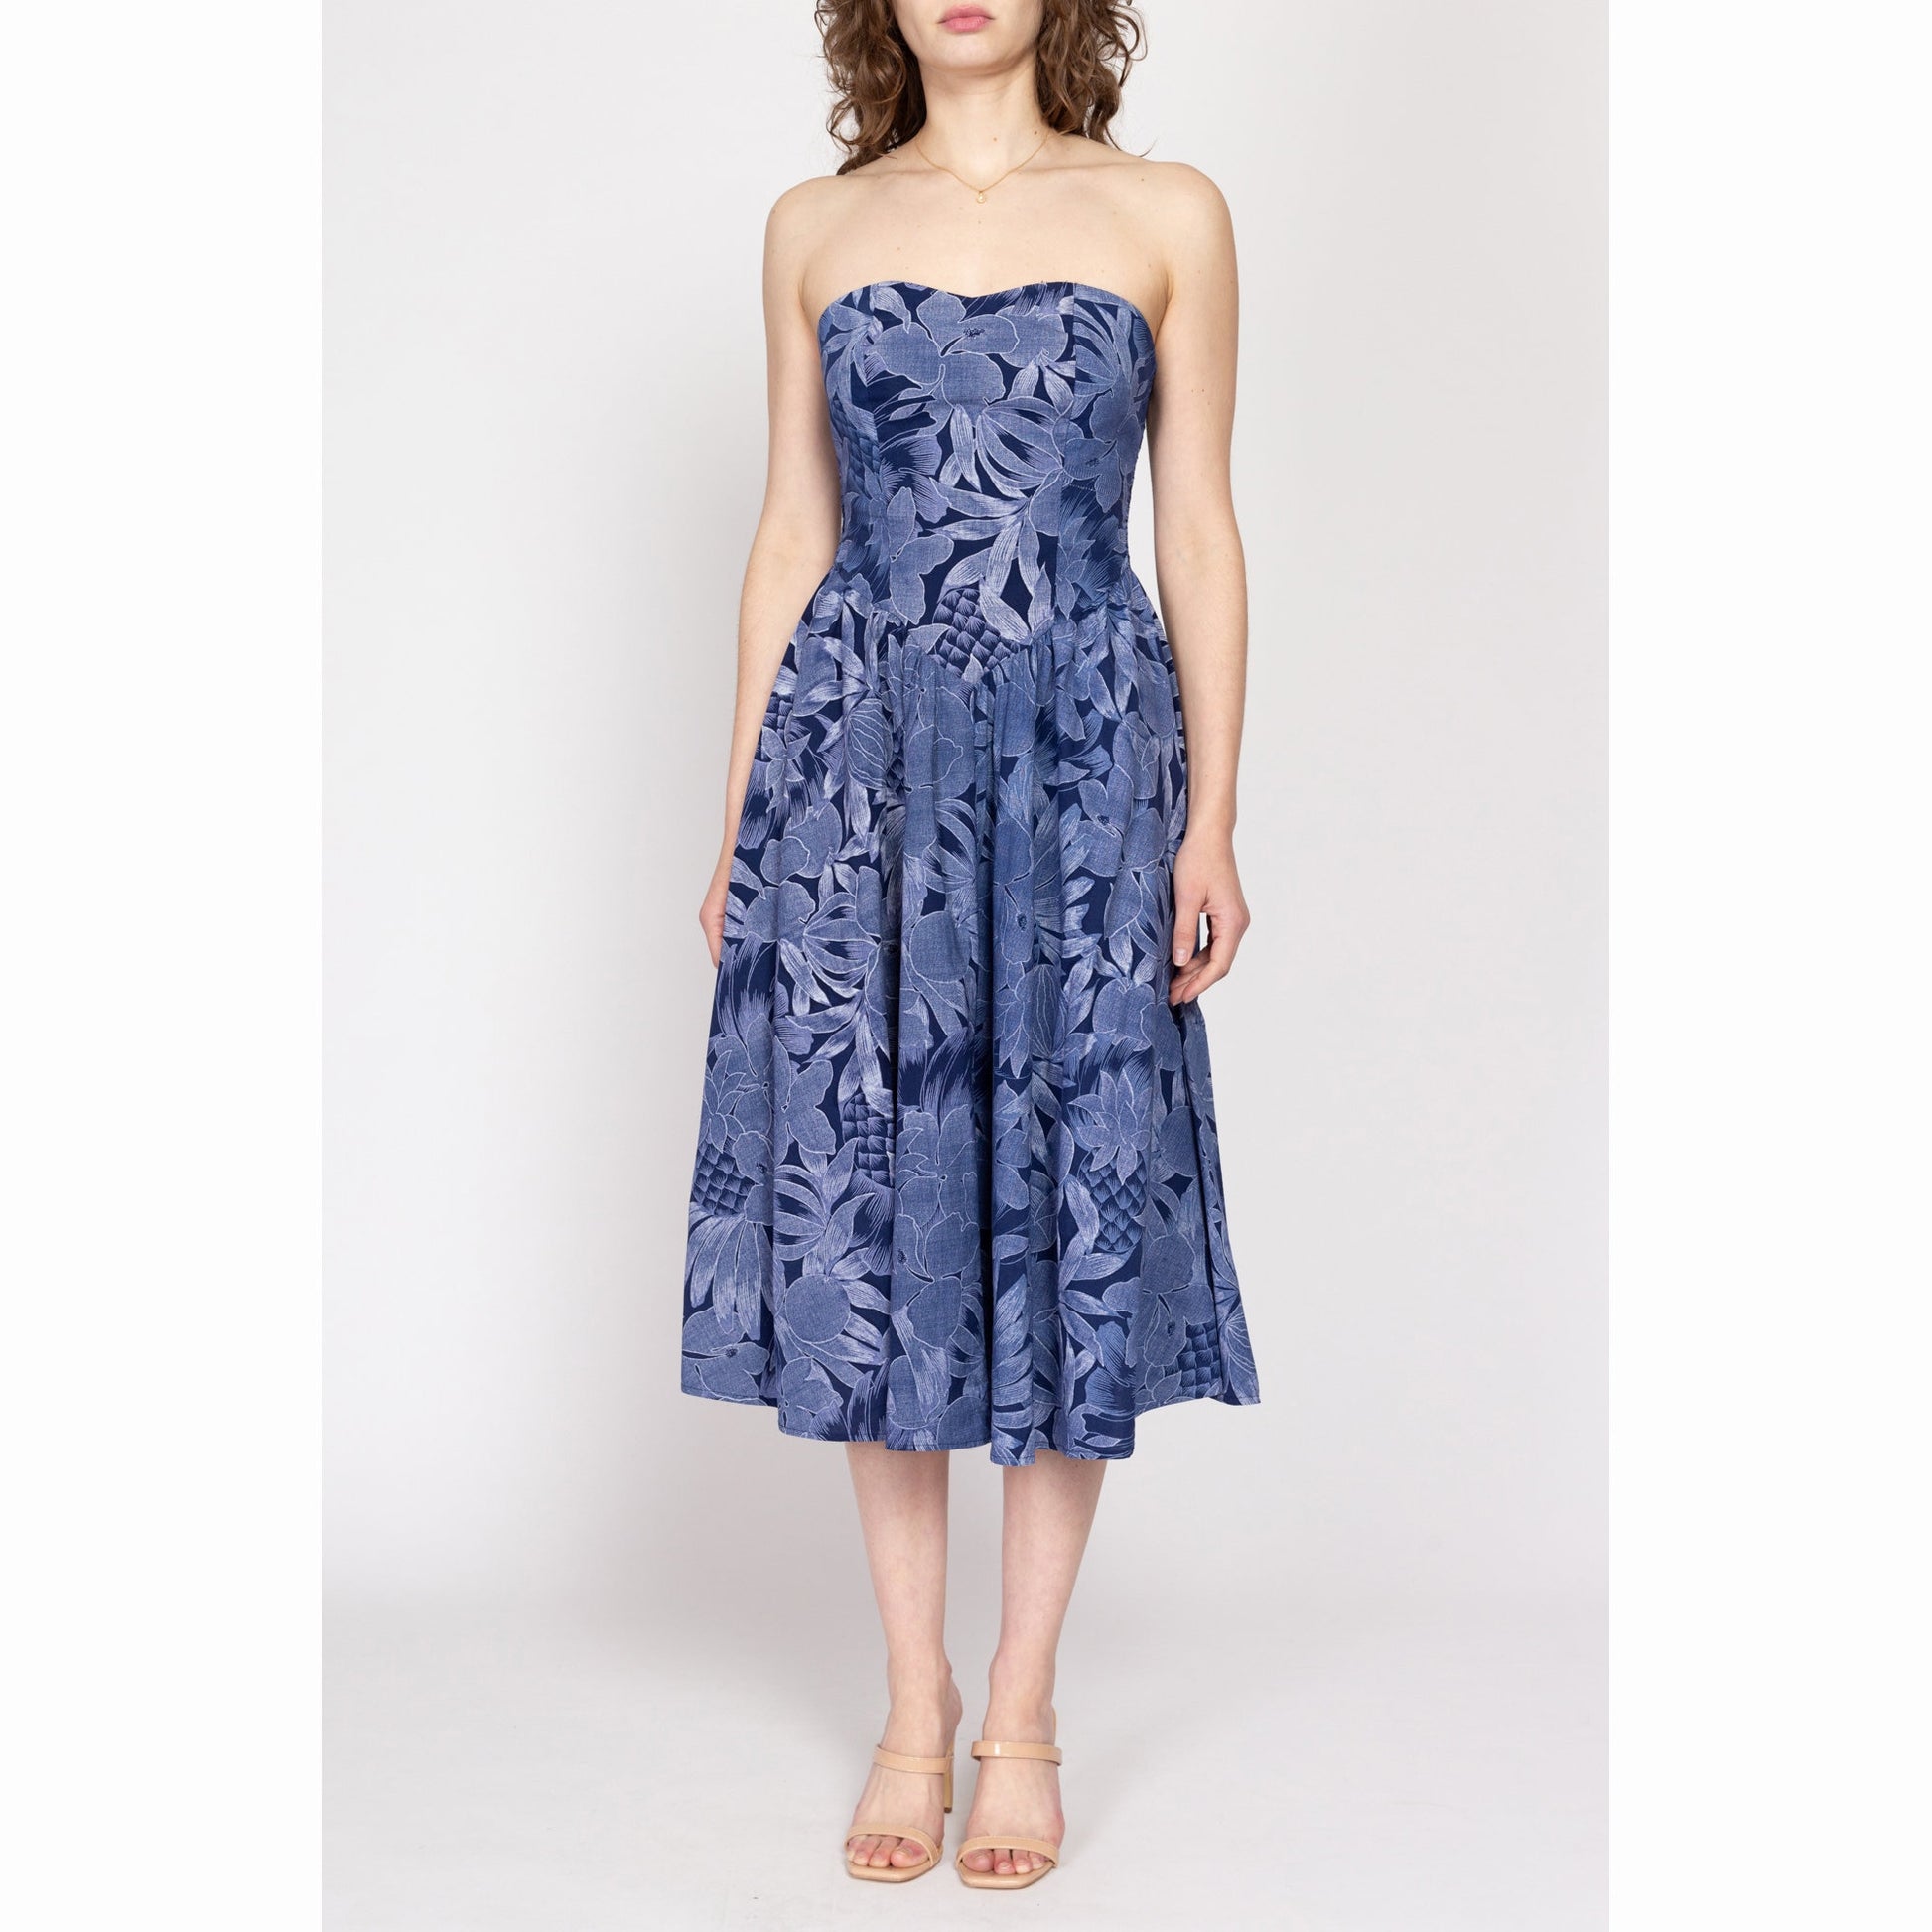 Medium 80s Blue Tropical Floral Strapless Fit & Flare Dress | Vintage Cotton Retro Midi Sundress